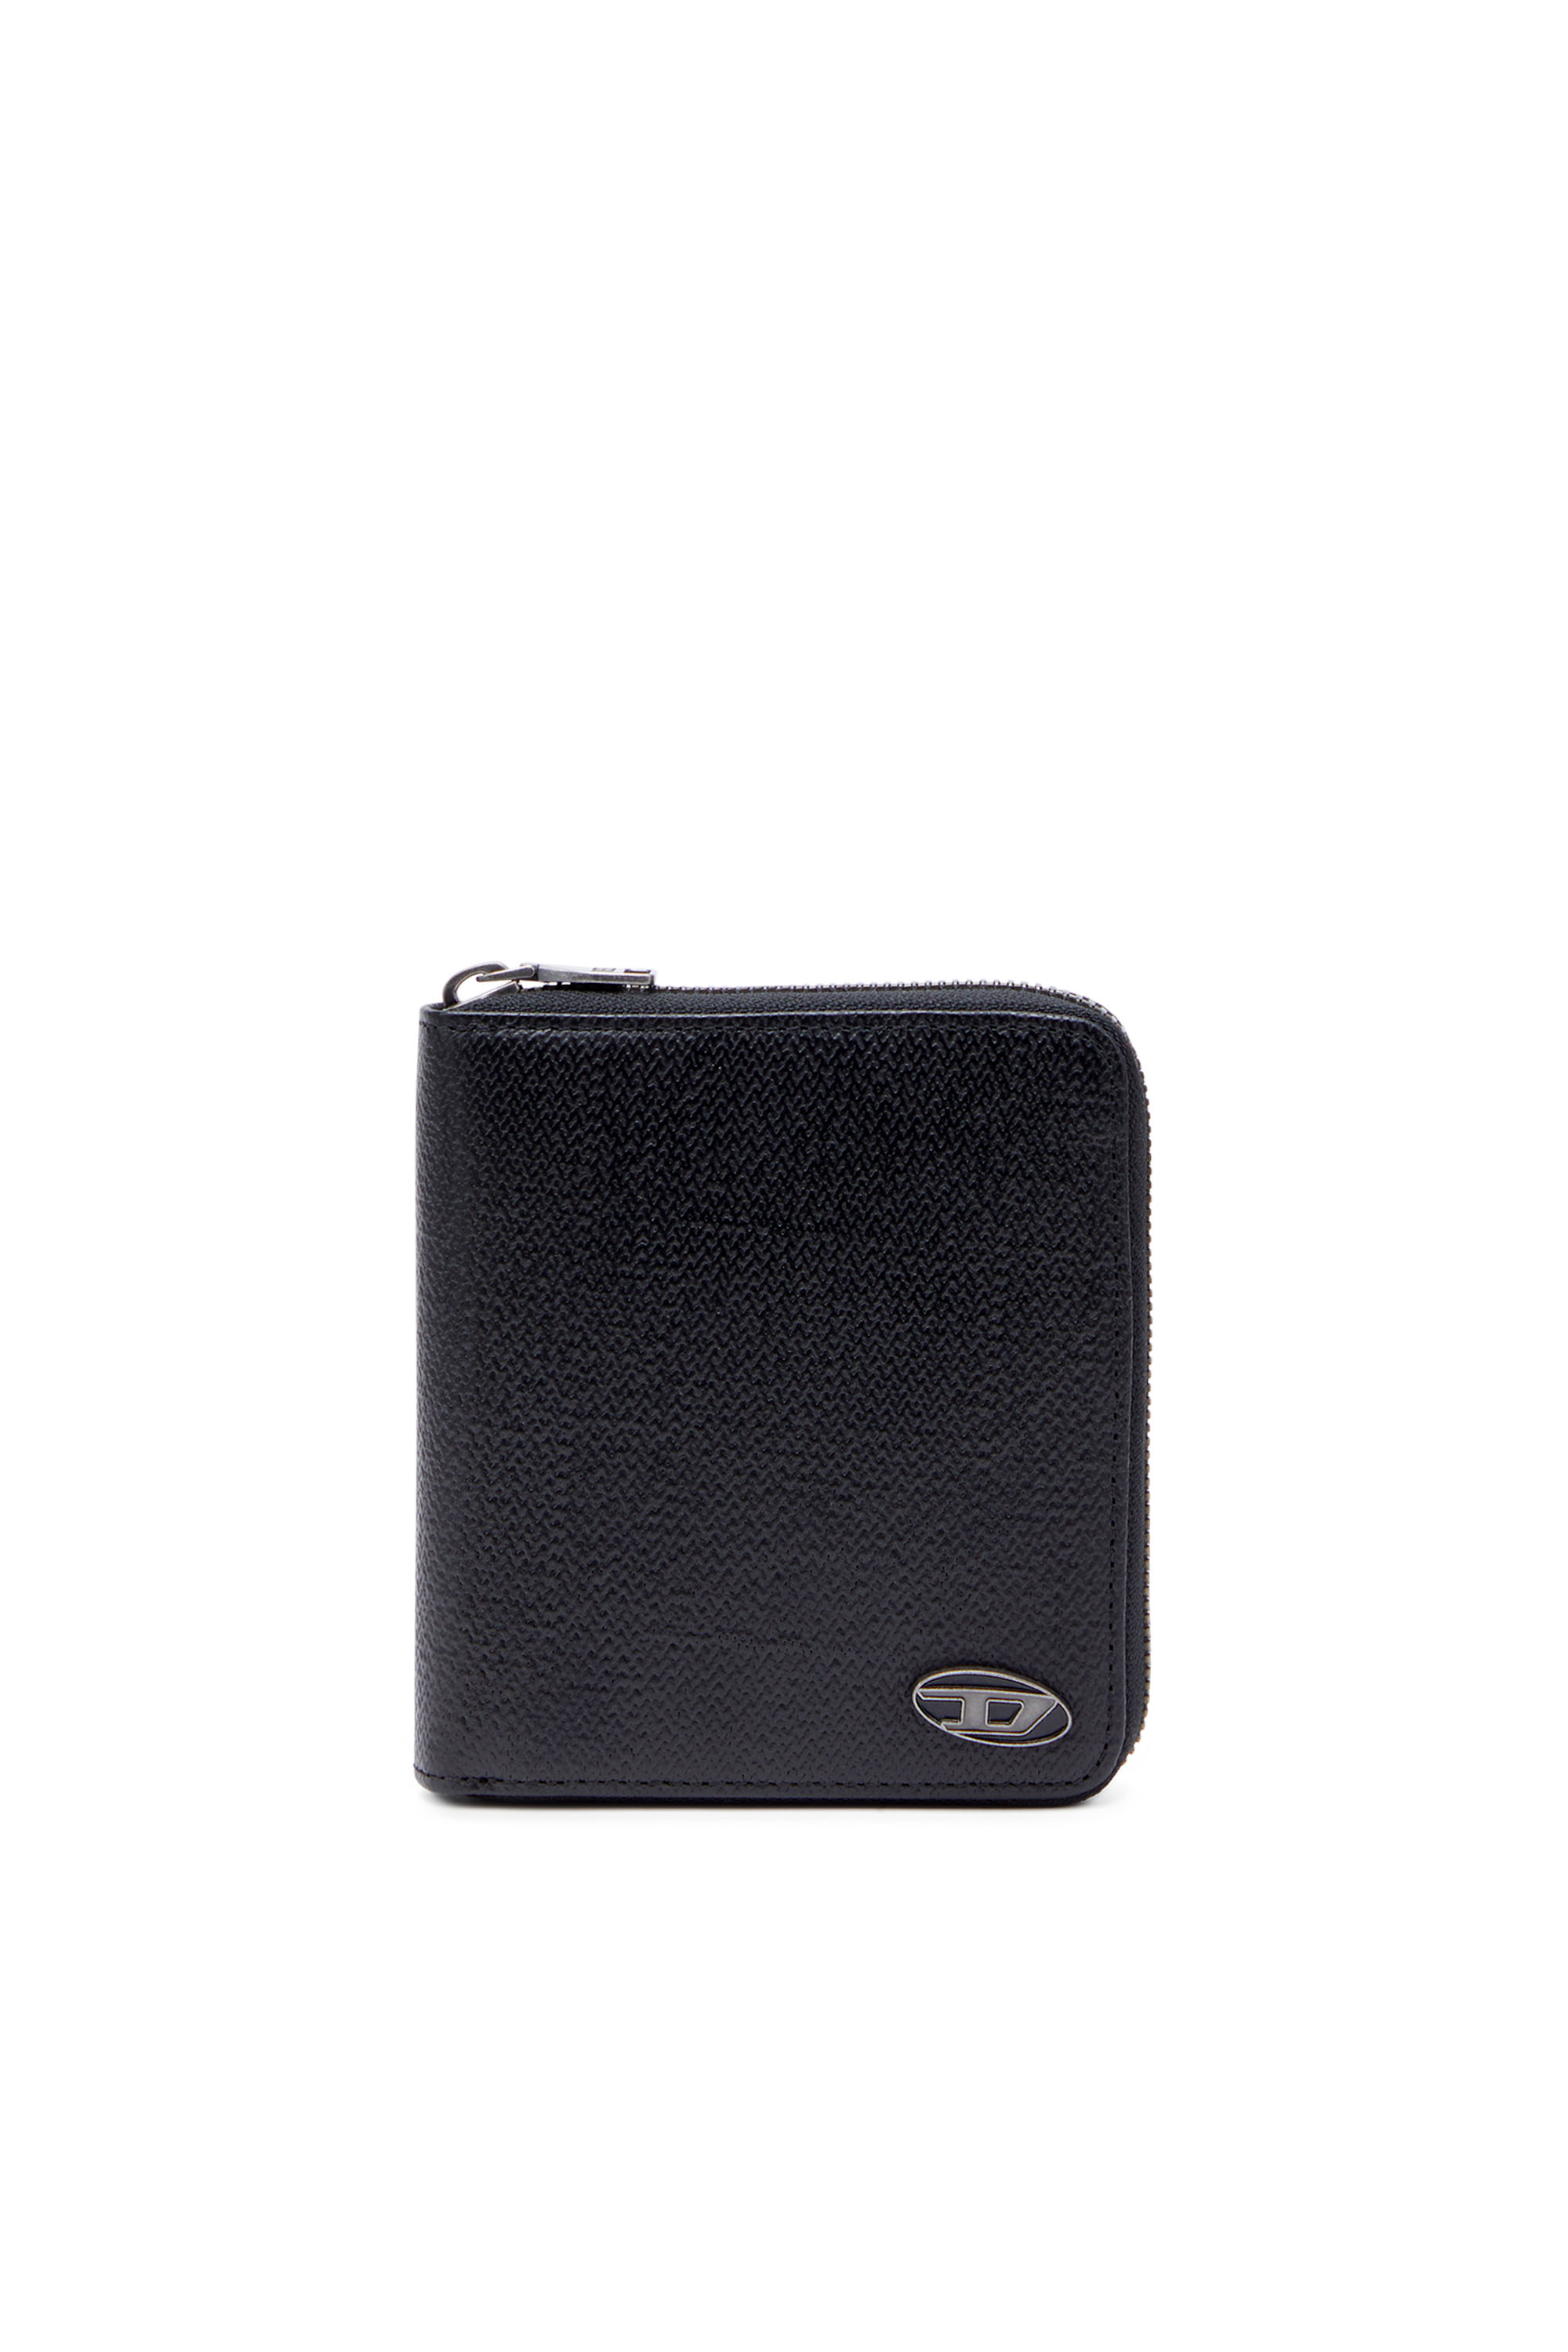 Diesel - Zip wallet in textured leather - Small Wallets - Man - Black